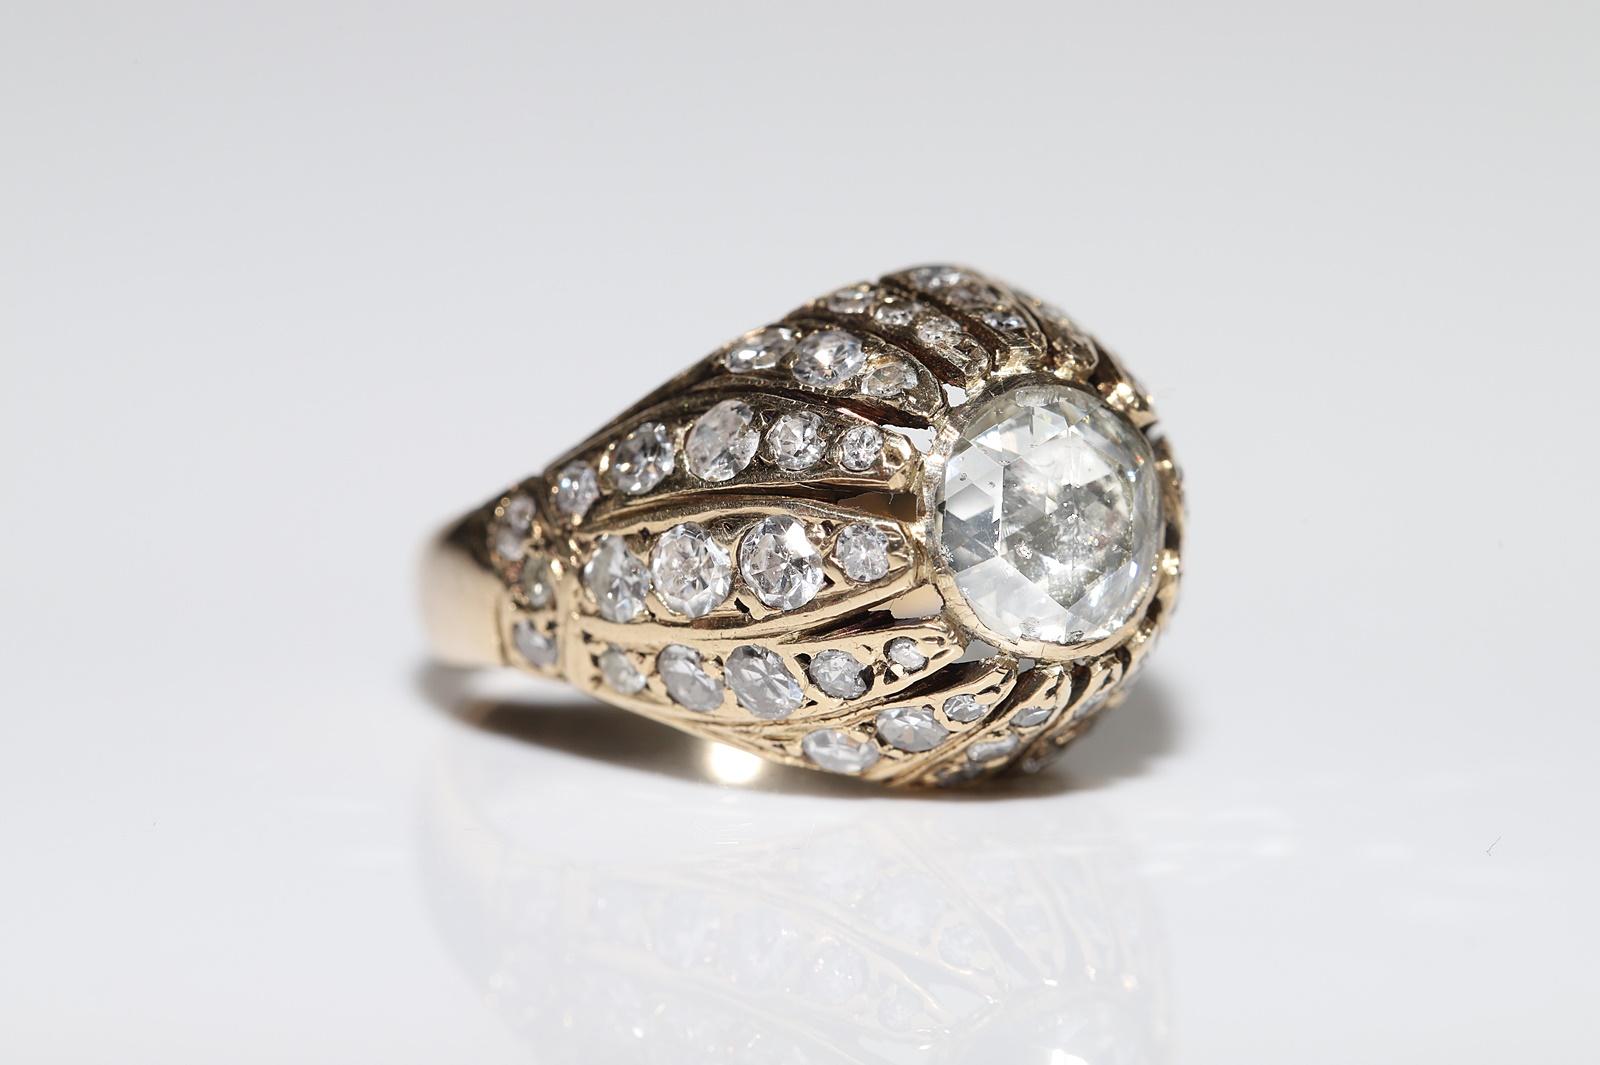 Brilliant Cut Antique Ottoman Circa 1900s 14k Gold Natural Diamond Decorated Solitaire Ring For Sale